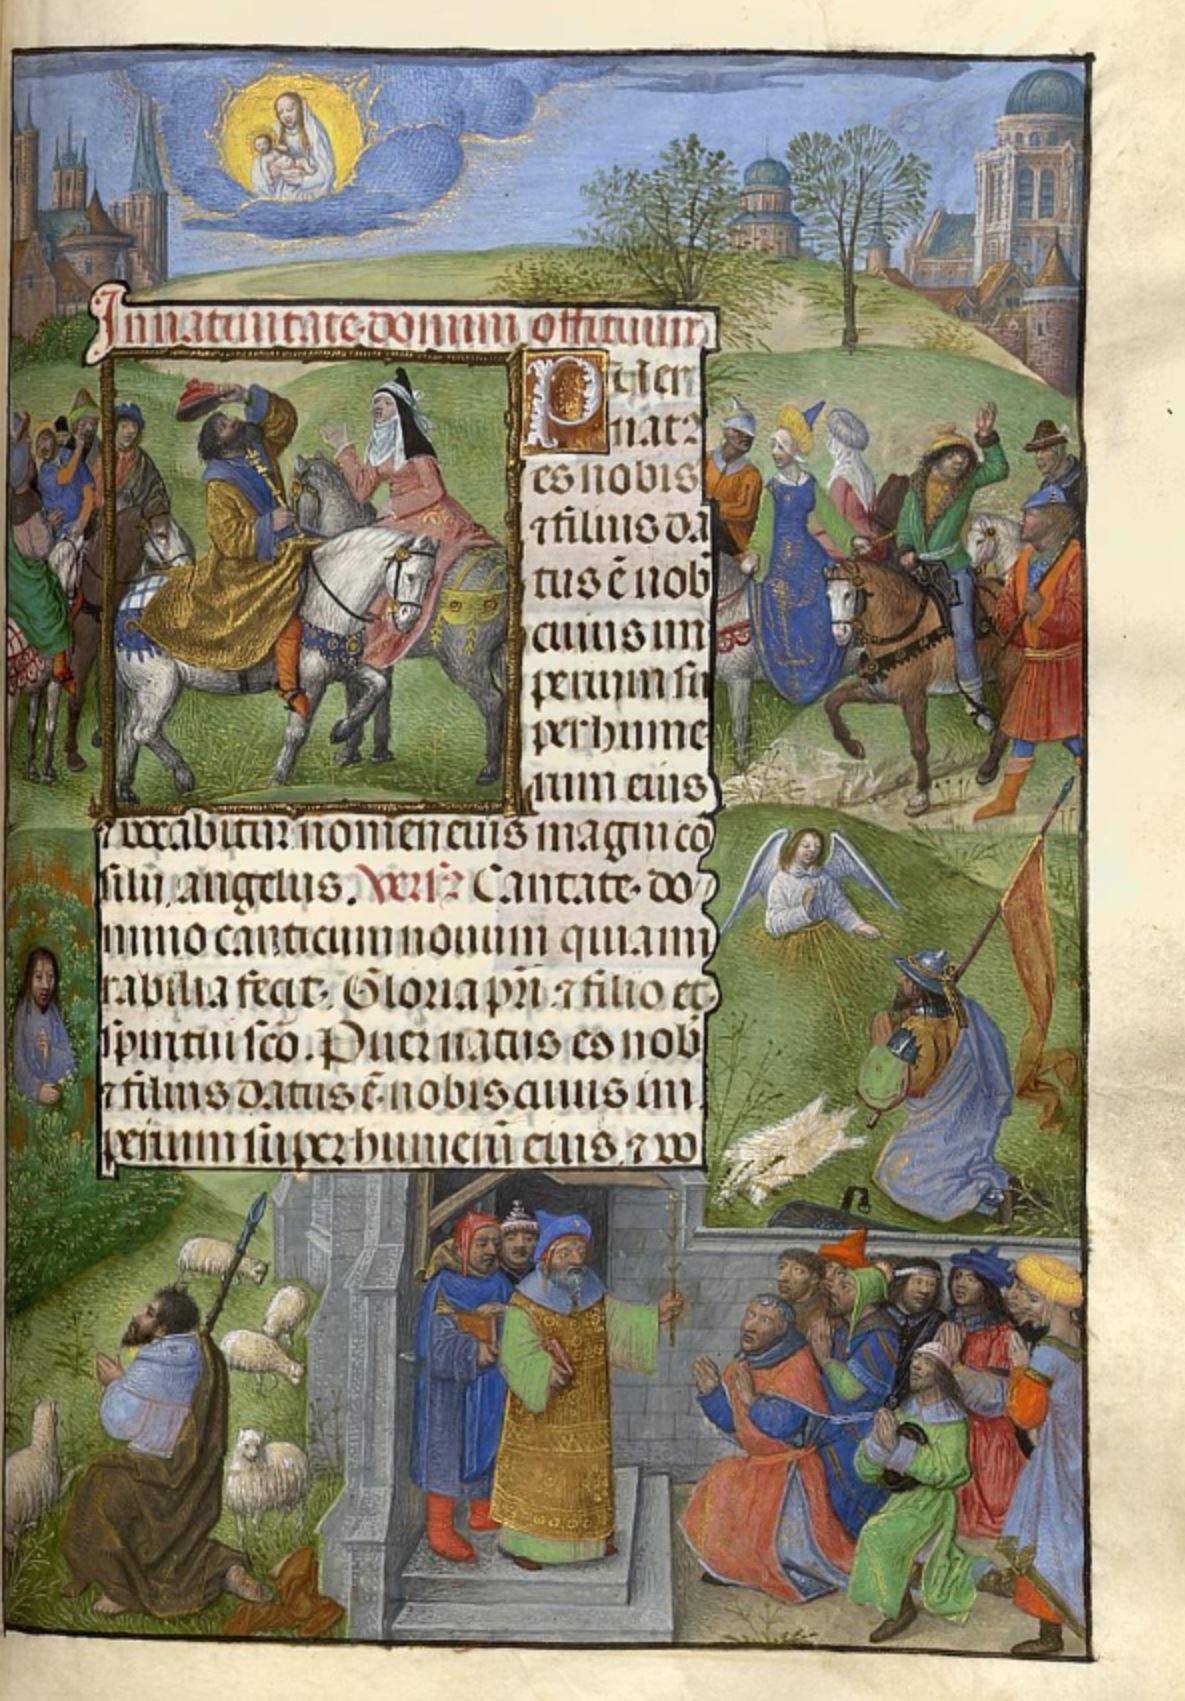 1483-98 Horae Beatae Mariae Virginis (La Flora, pour Charles VIII) Biblioteca nazionale Napoli Ms. I. B. 51 fol 264